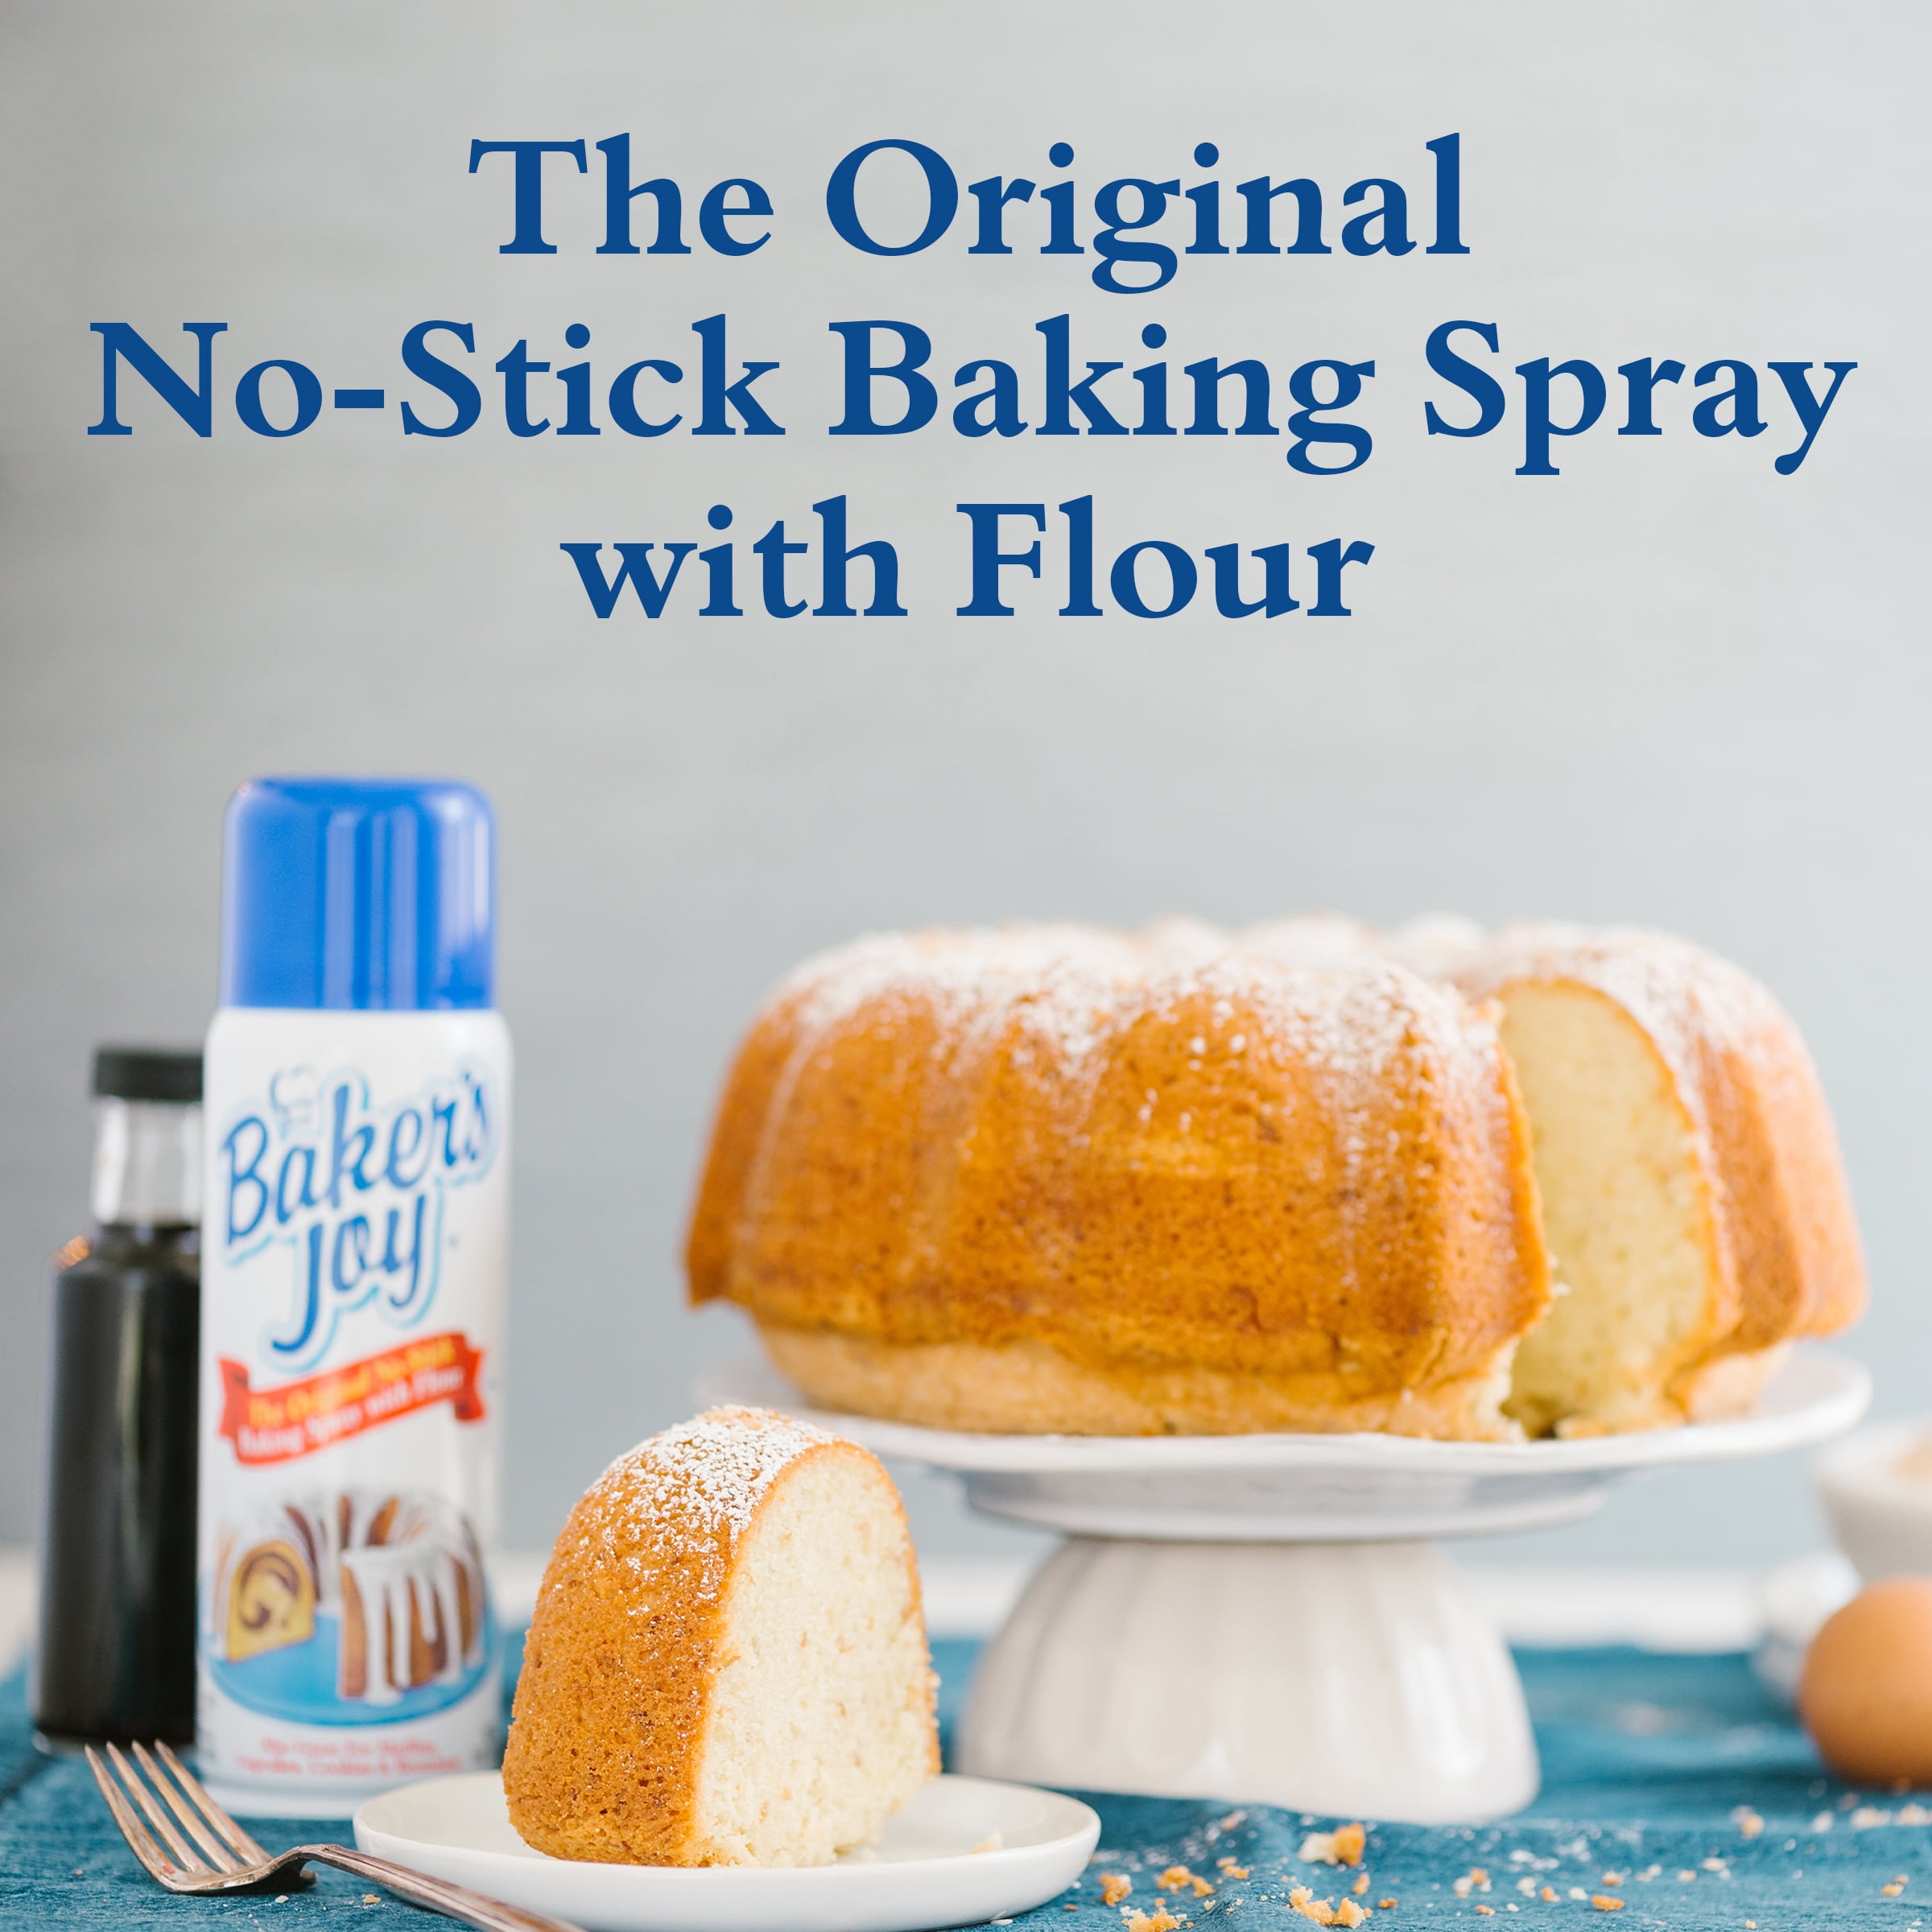 Baker's Joy No-Stick Baking Spray with Flour, 5 Oz